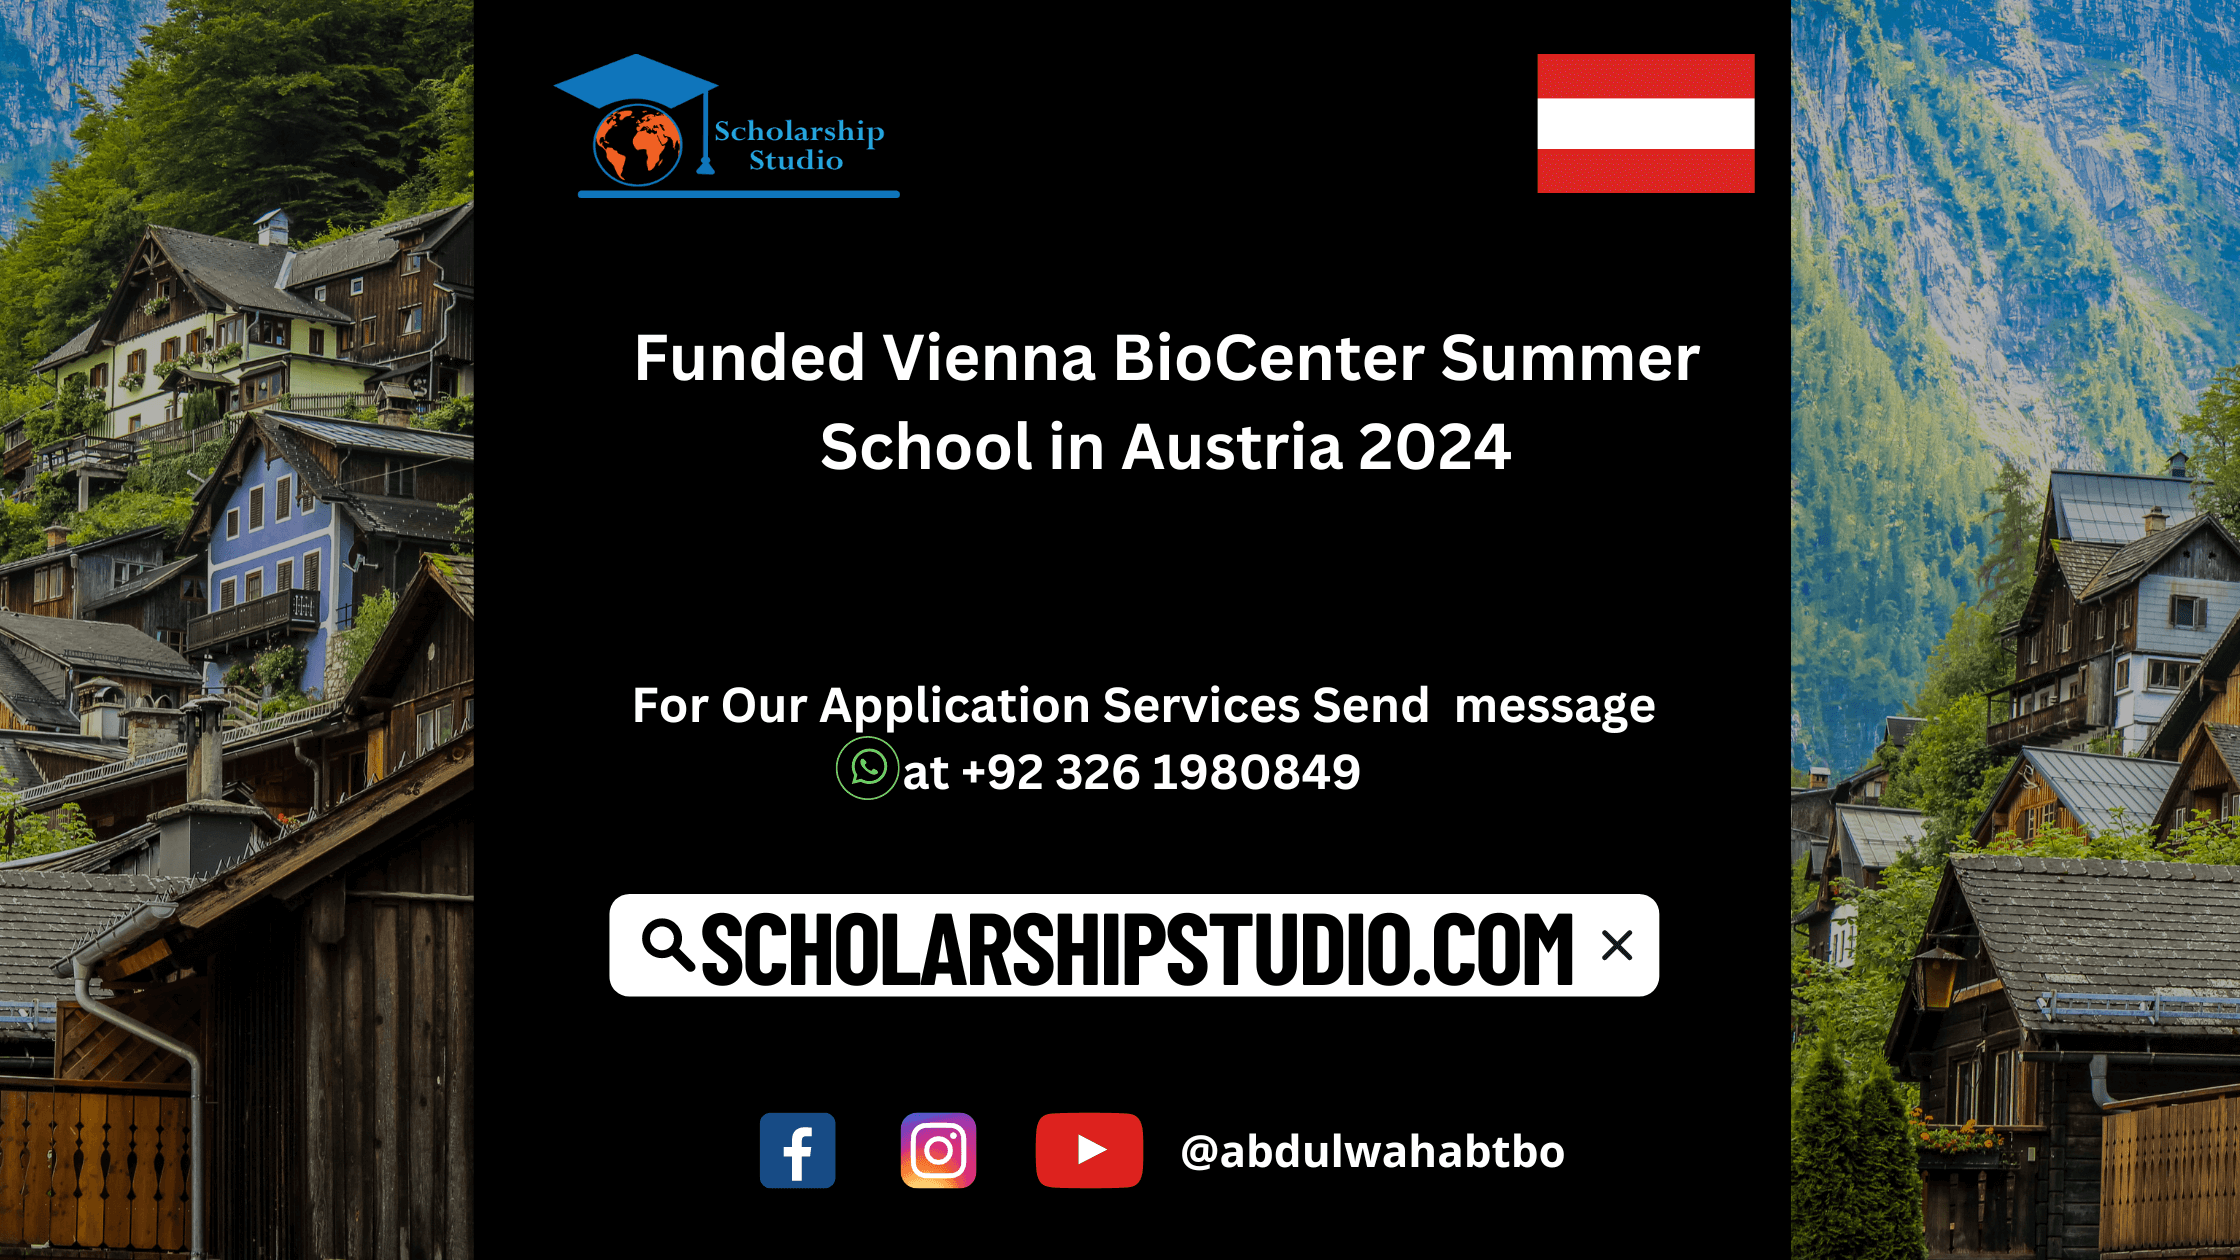 Funded Vienna BioCenter Summer School in Austria 2024 Scholarship studio